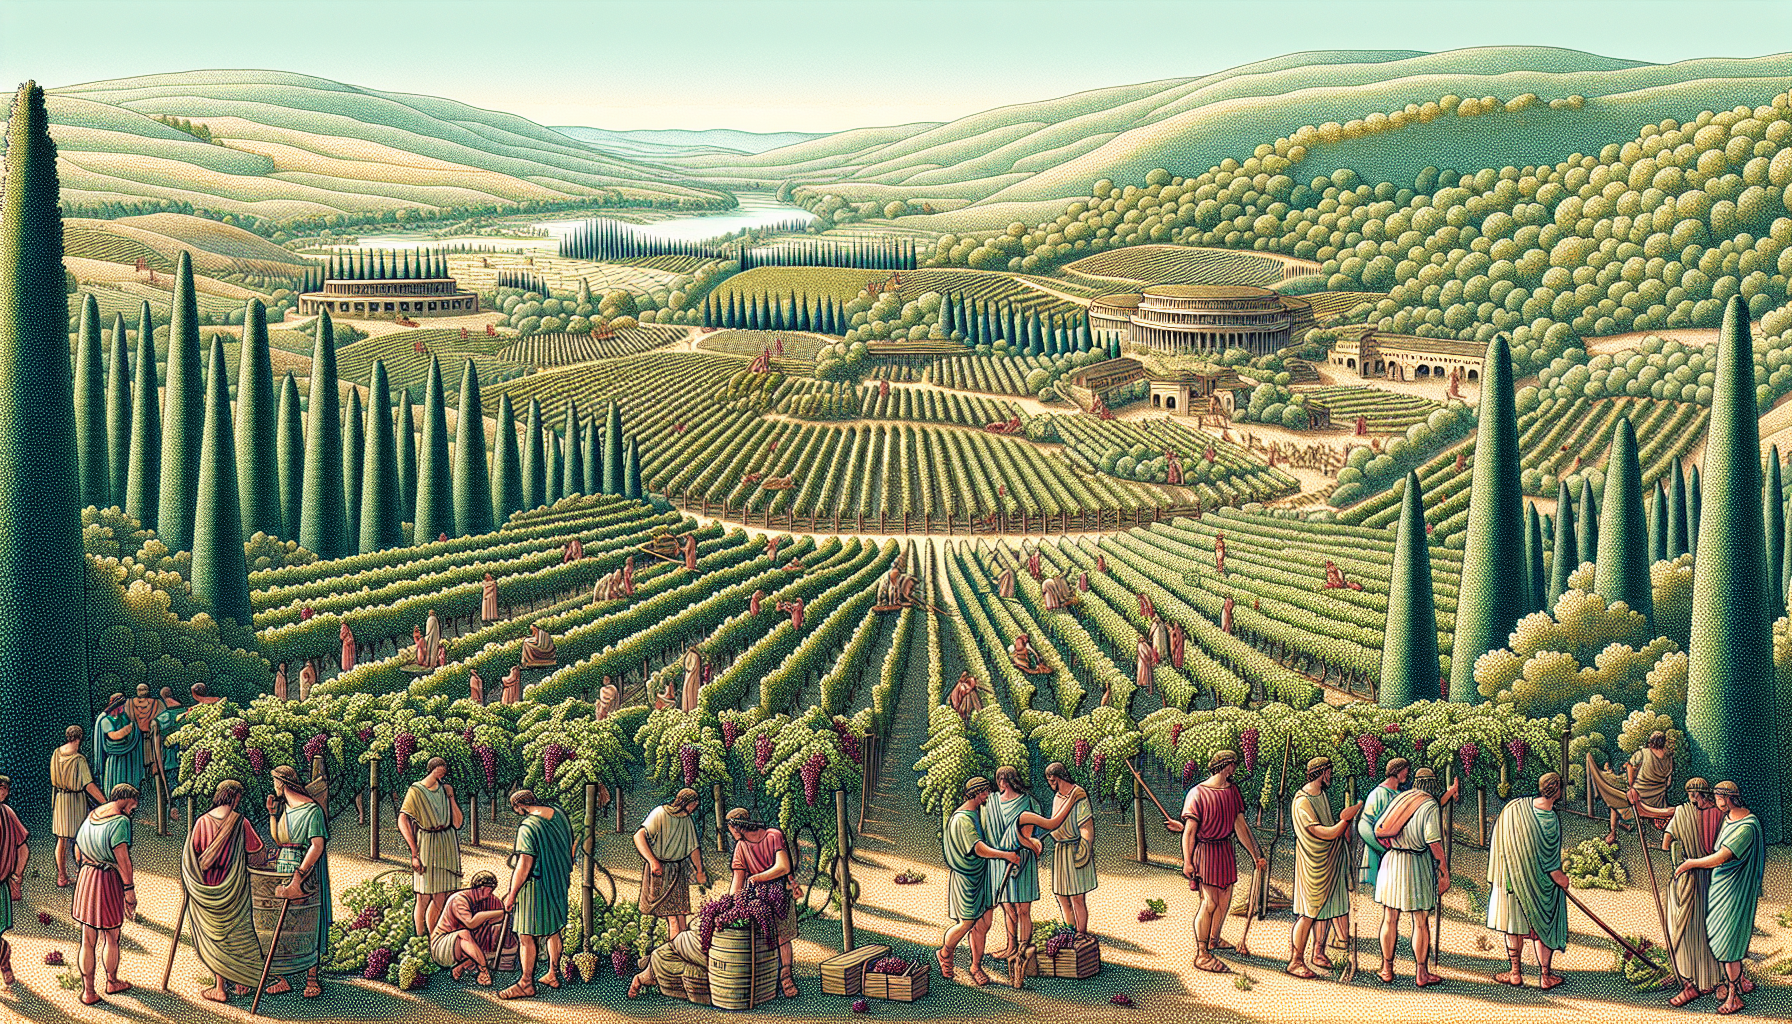 Illustration of ancient Roman vineyard in Champagne region